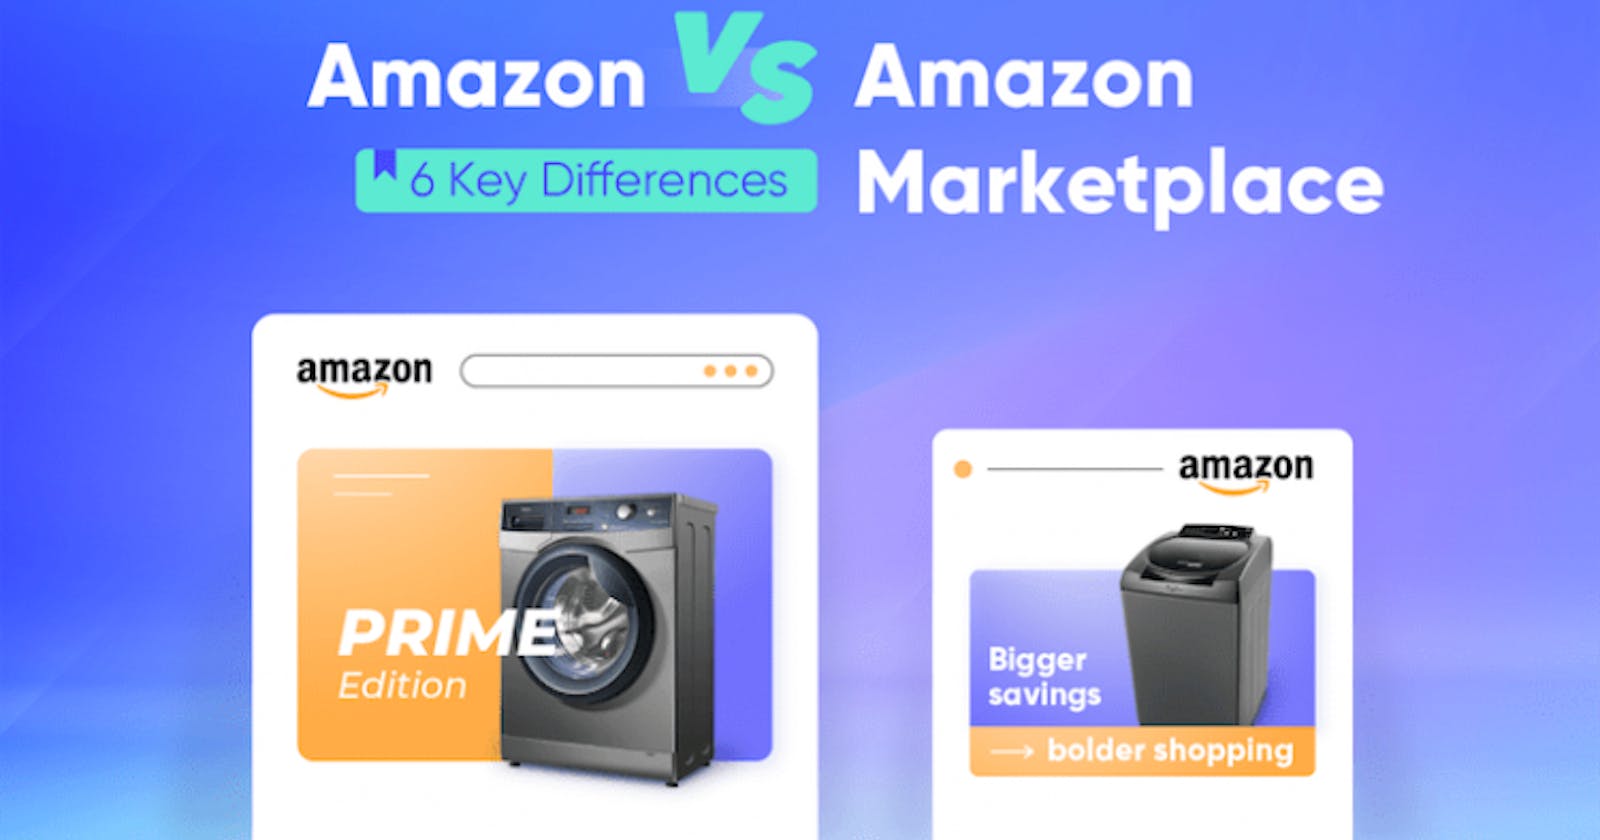 Is Amazon the same as Amazon Marketplace?